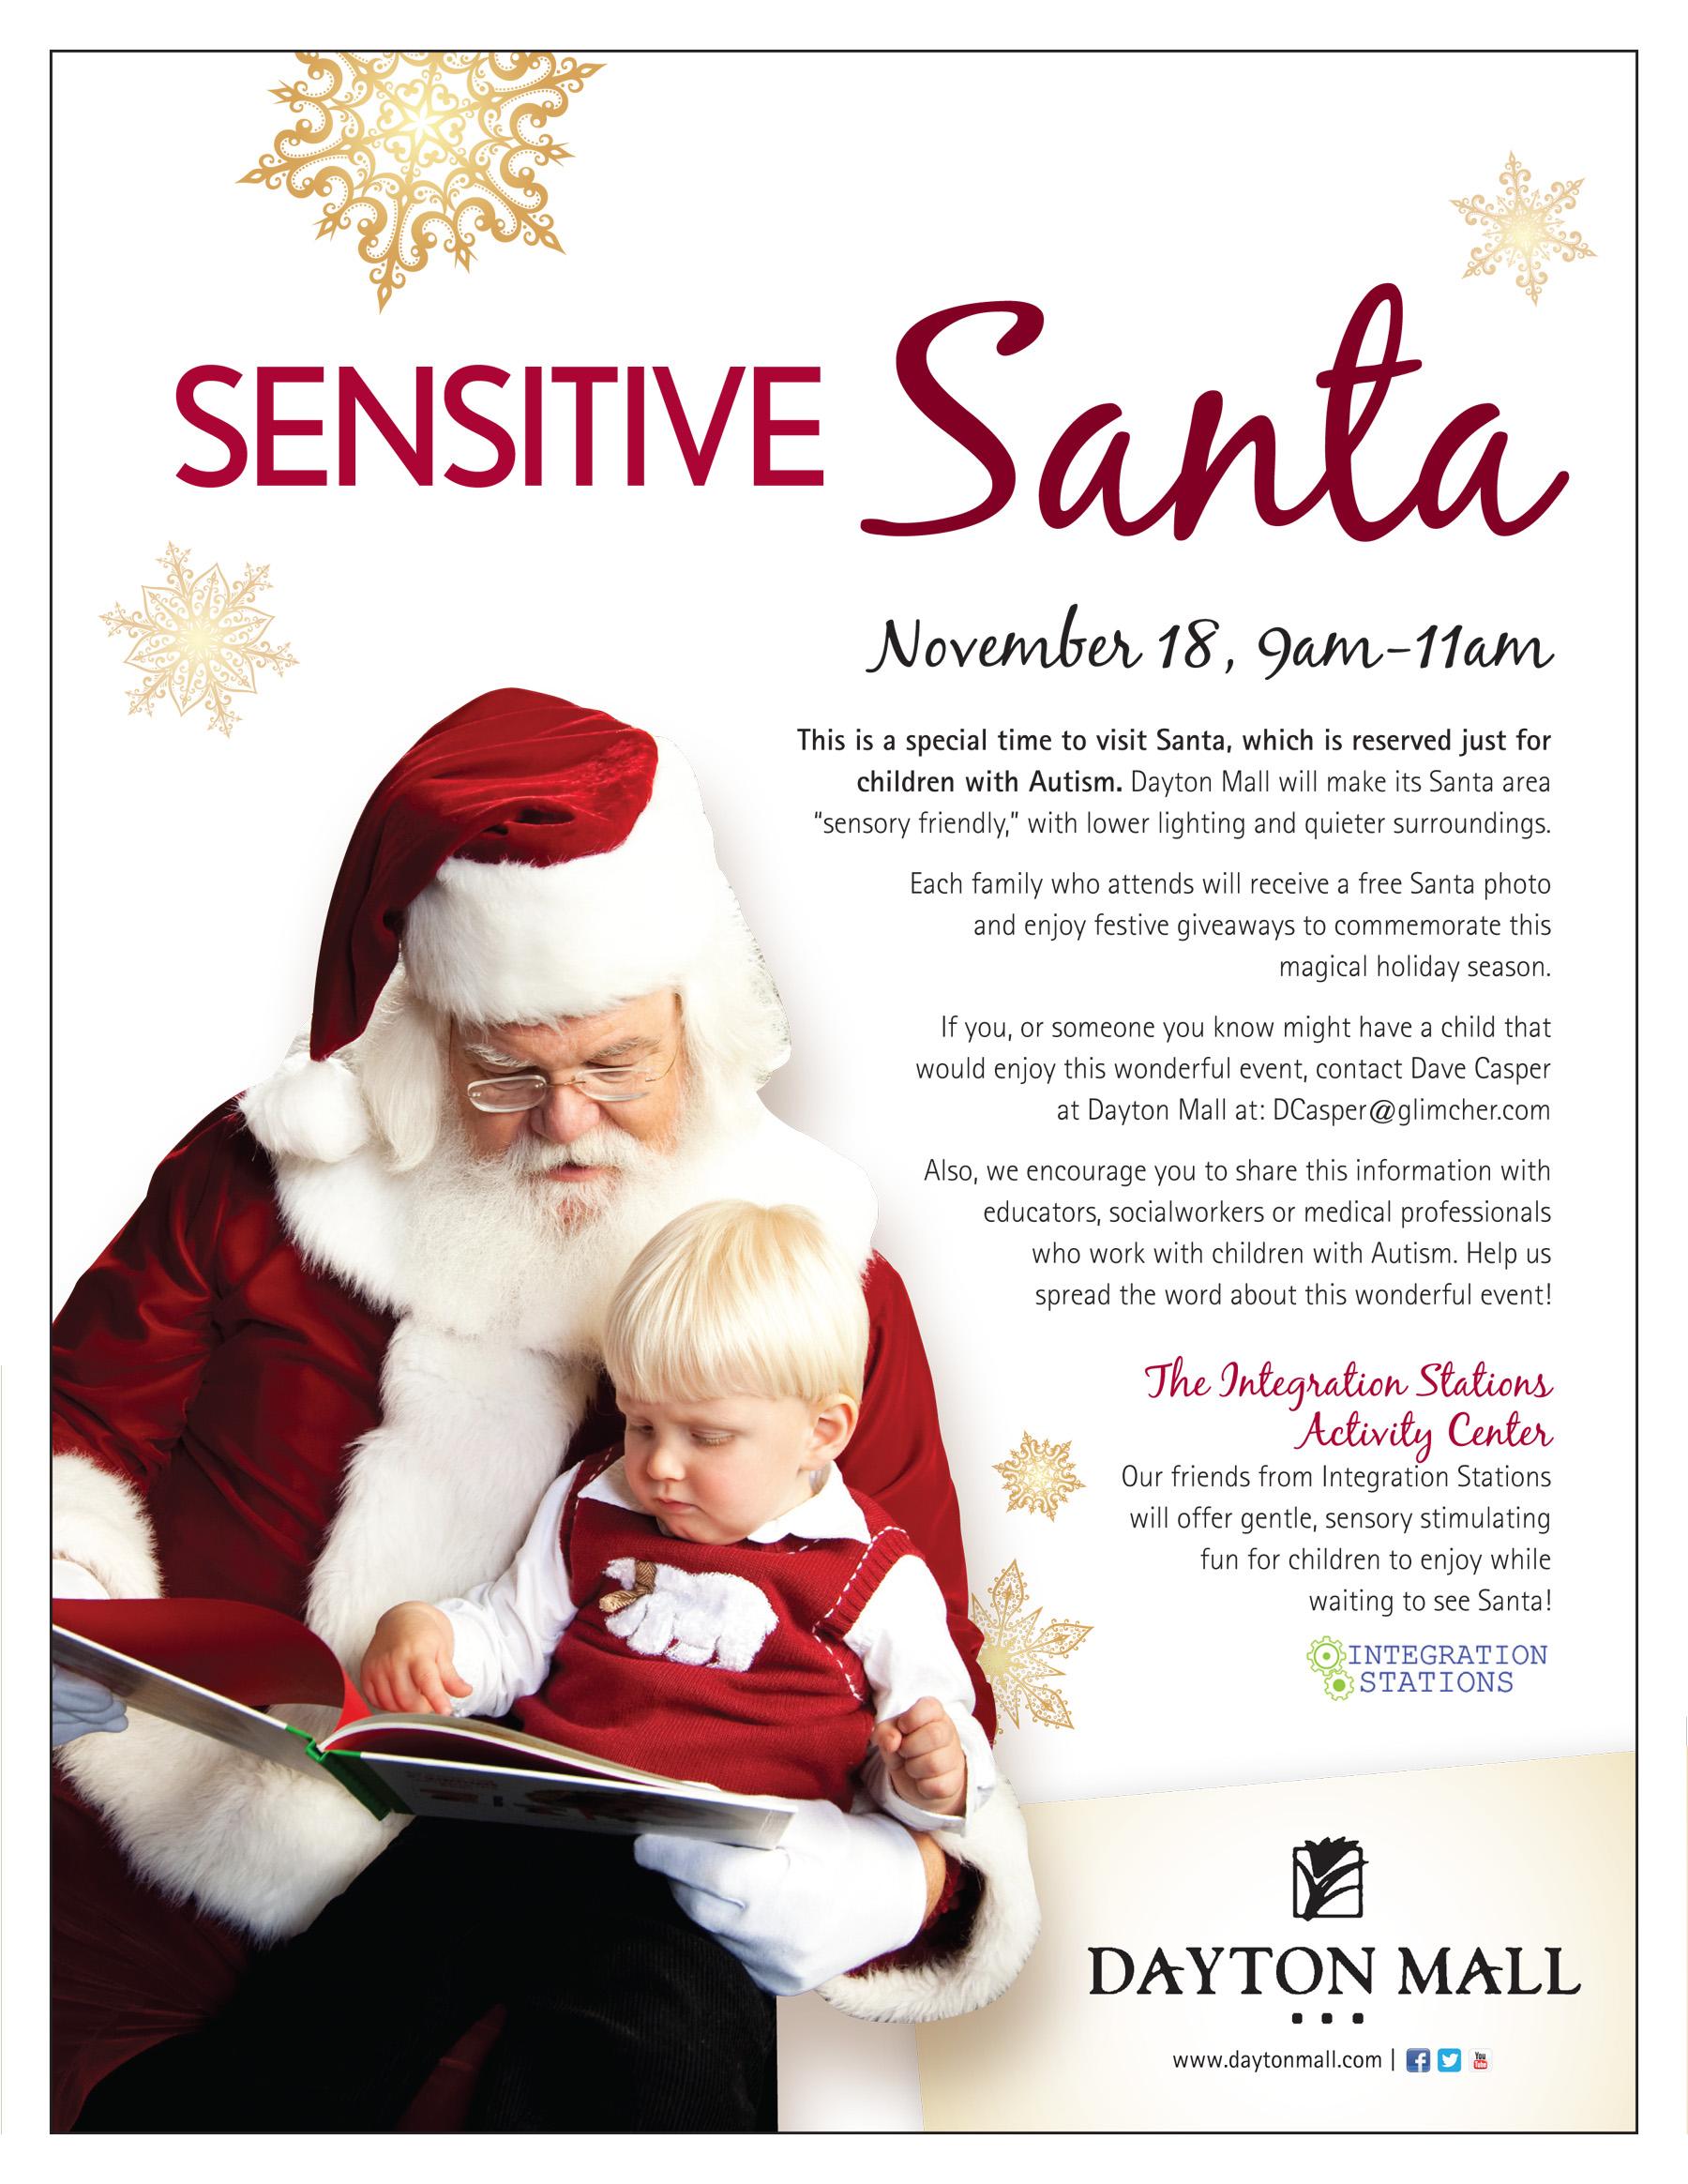 Sensitive Santa brightens holidays for autistic children WVXU